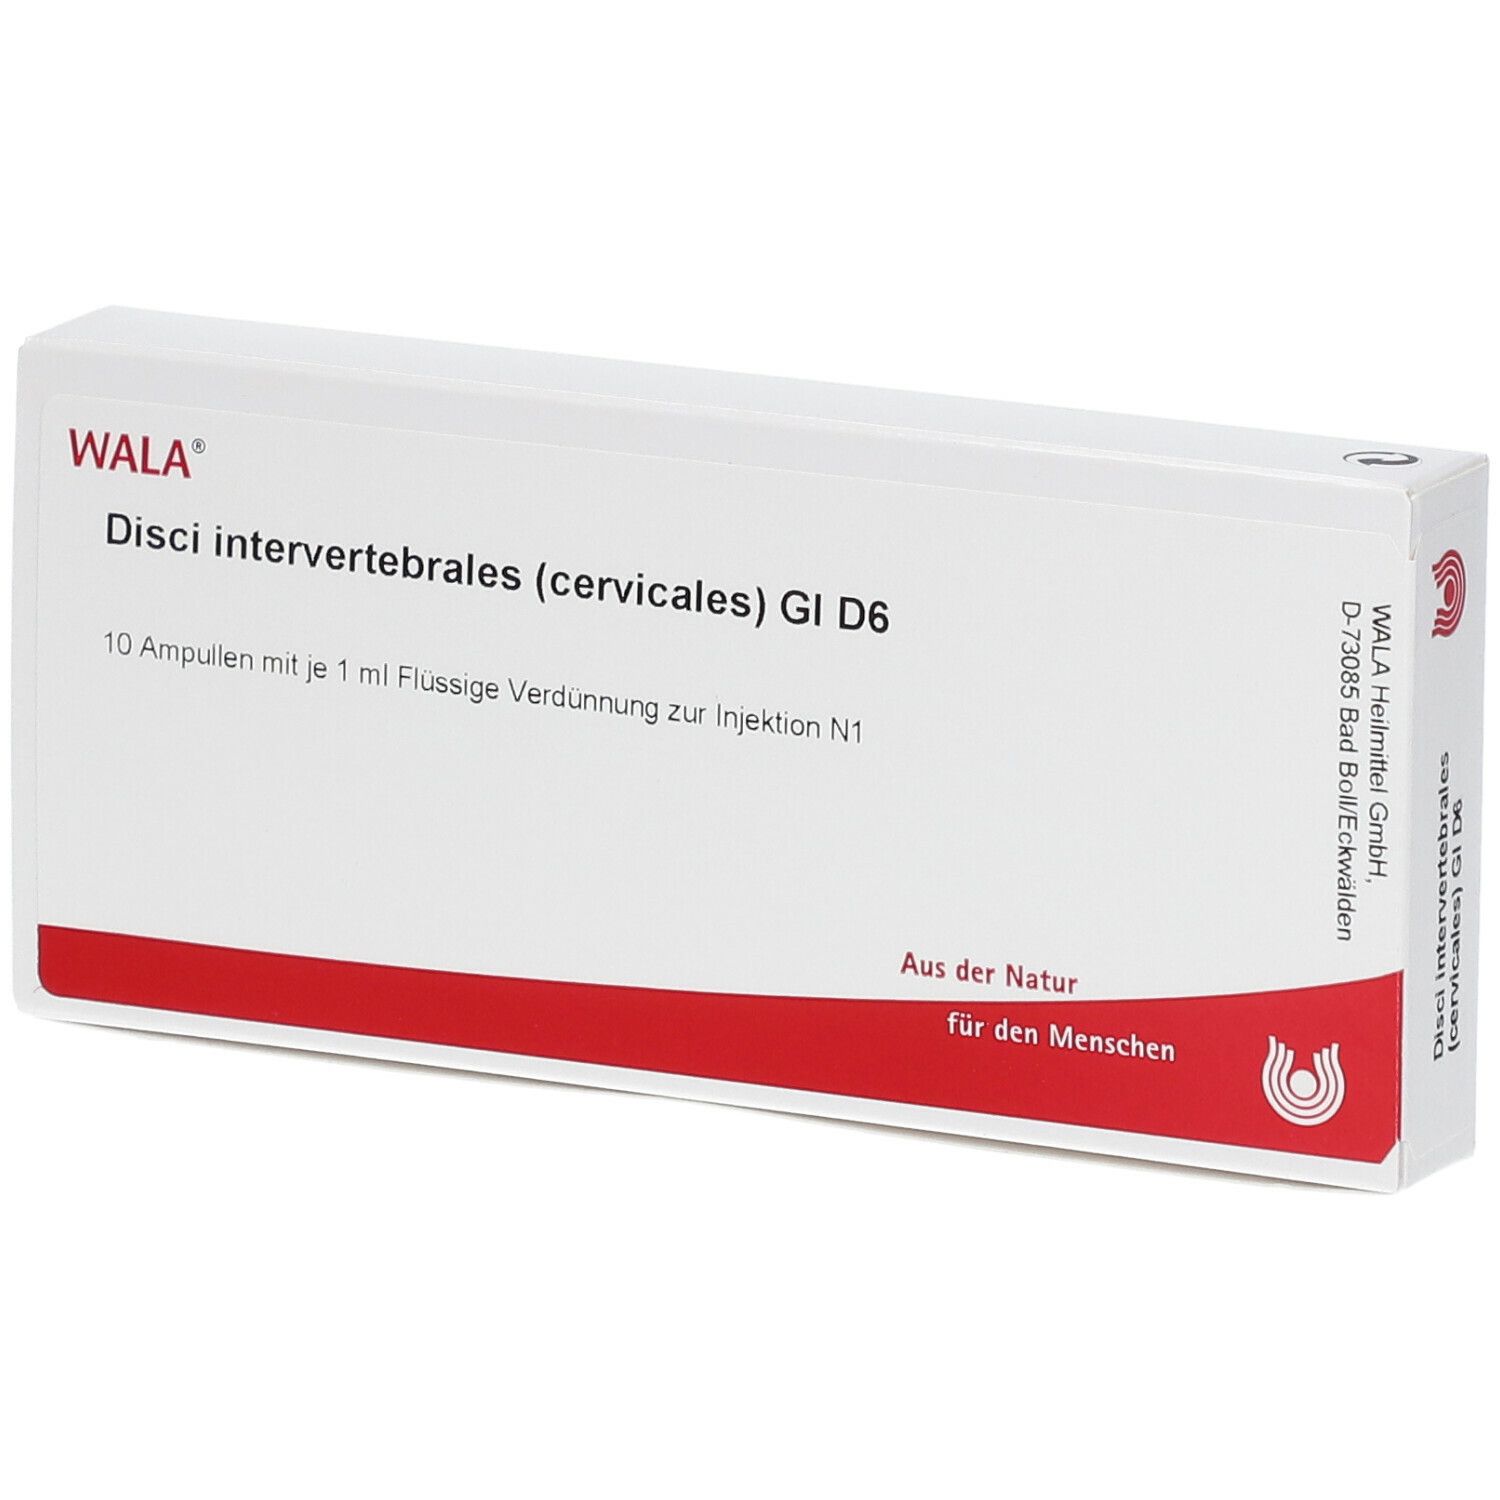 WALA® Disci intervertebrales cervicales Gl D 6